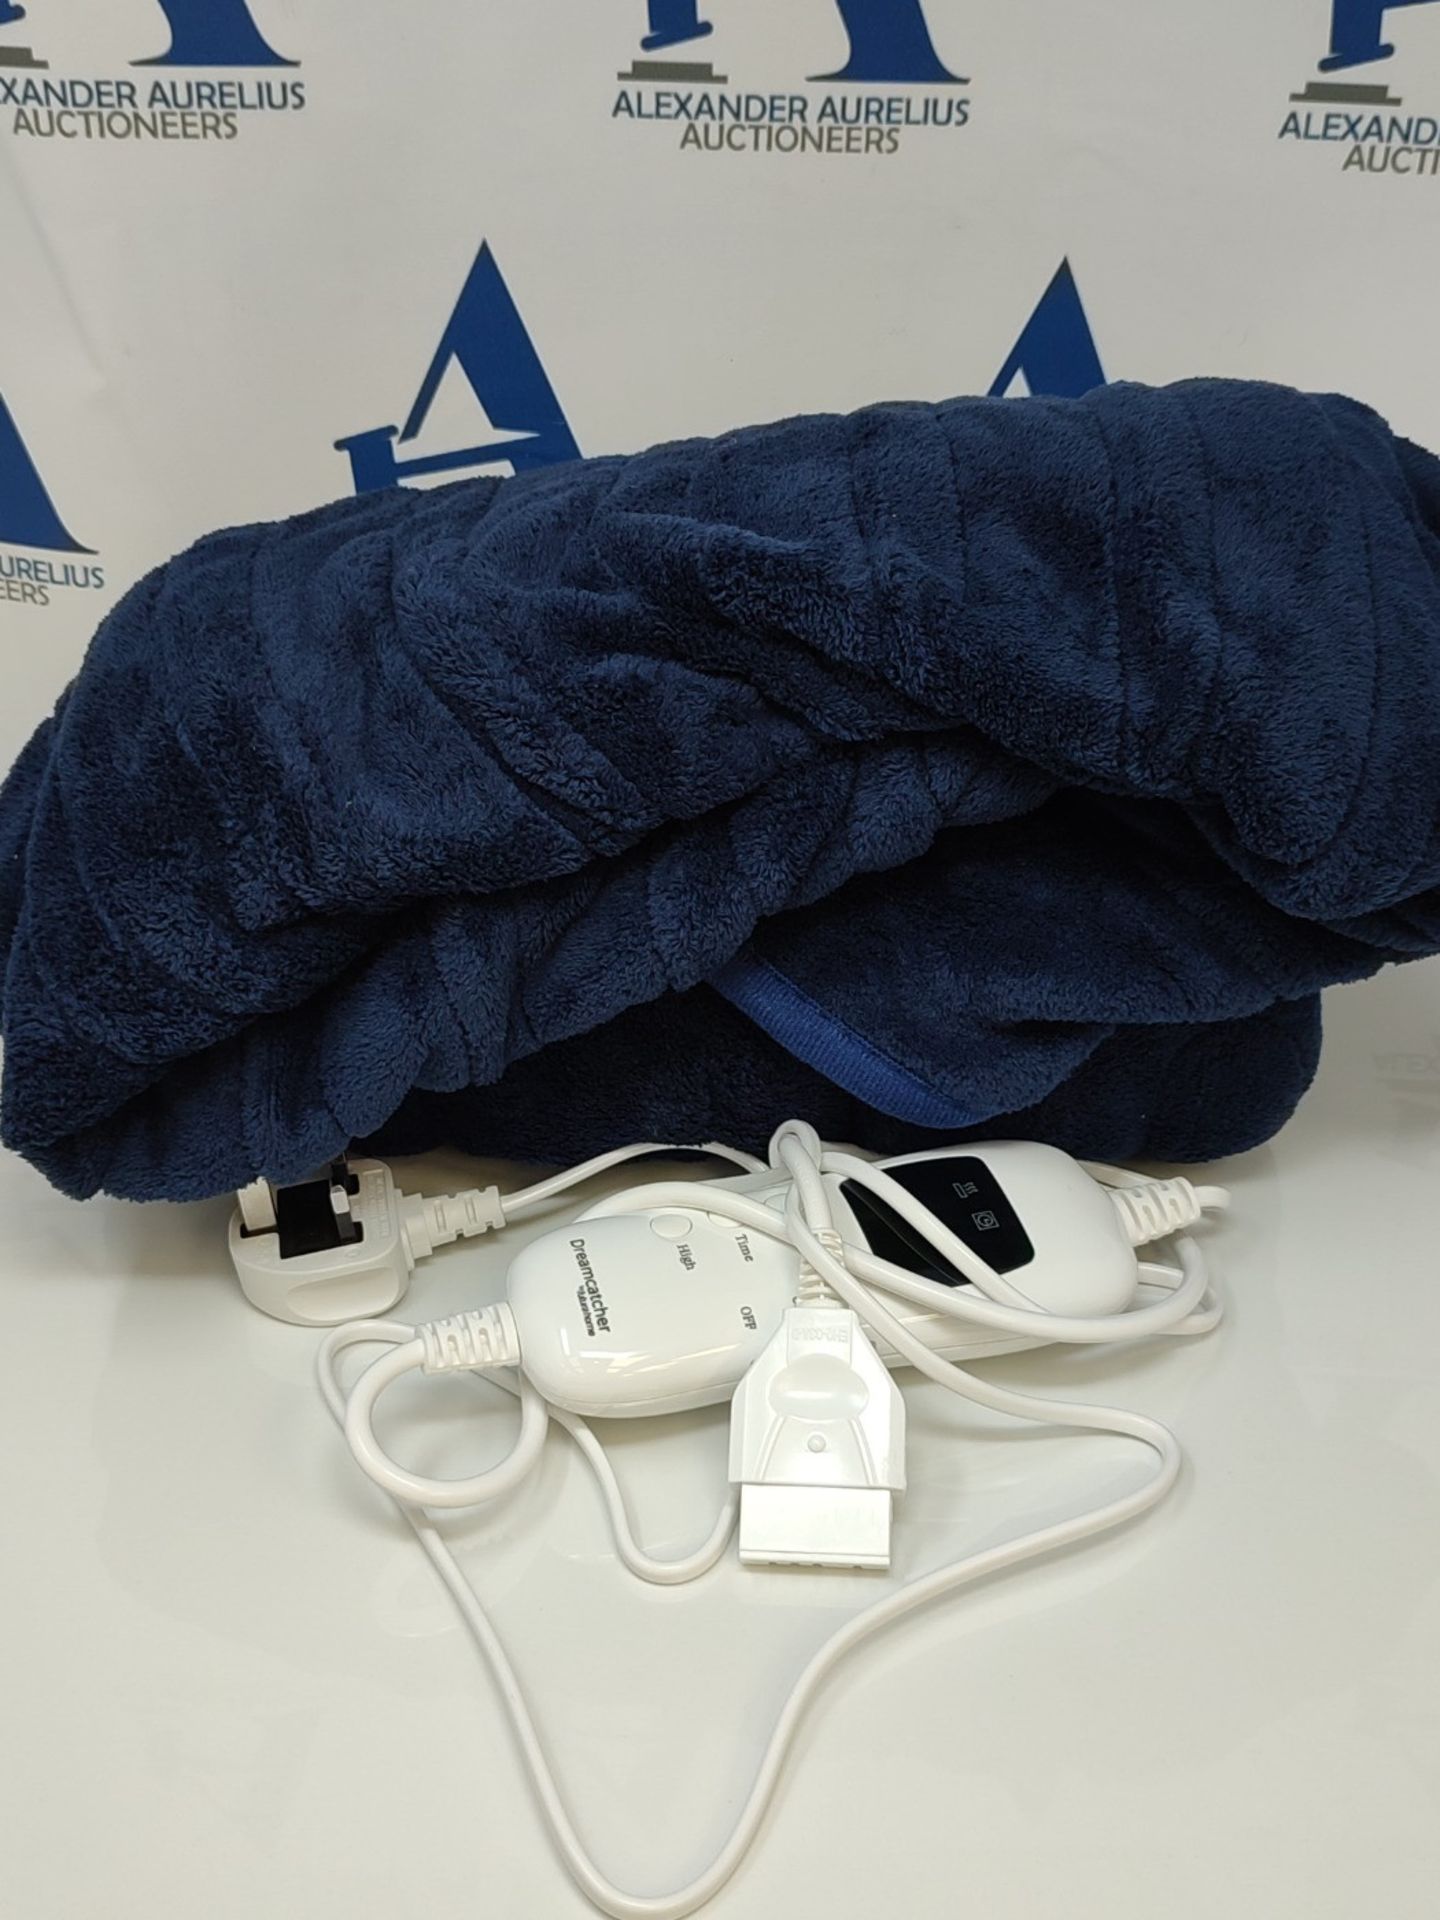 Dreamcatcher Electric Heated Throw Blanket 160 x 120cm, Machine Washable Soft Fleece O